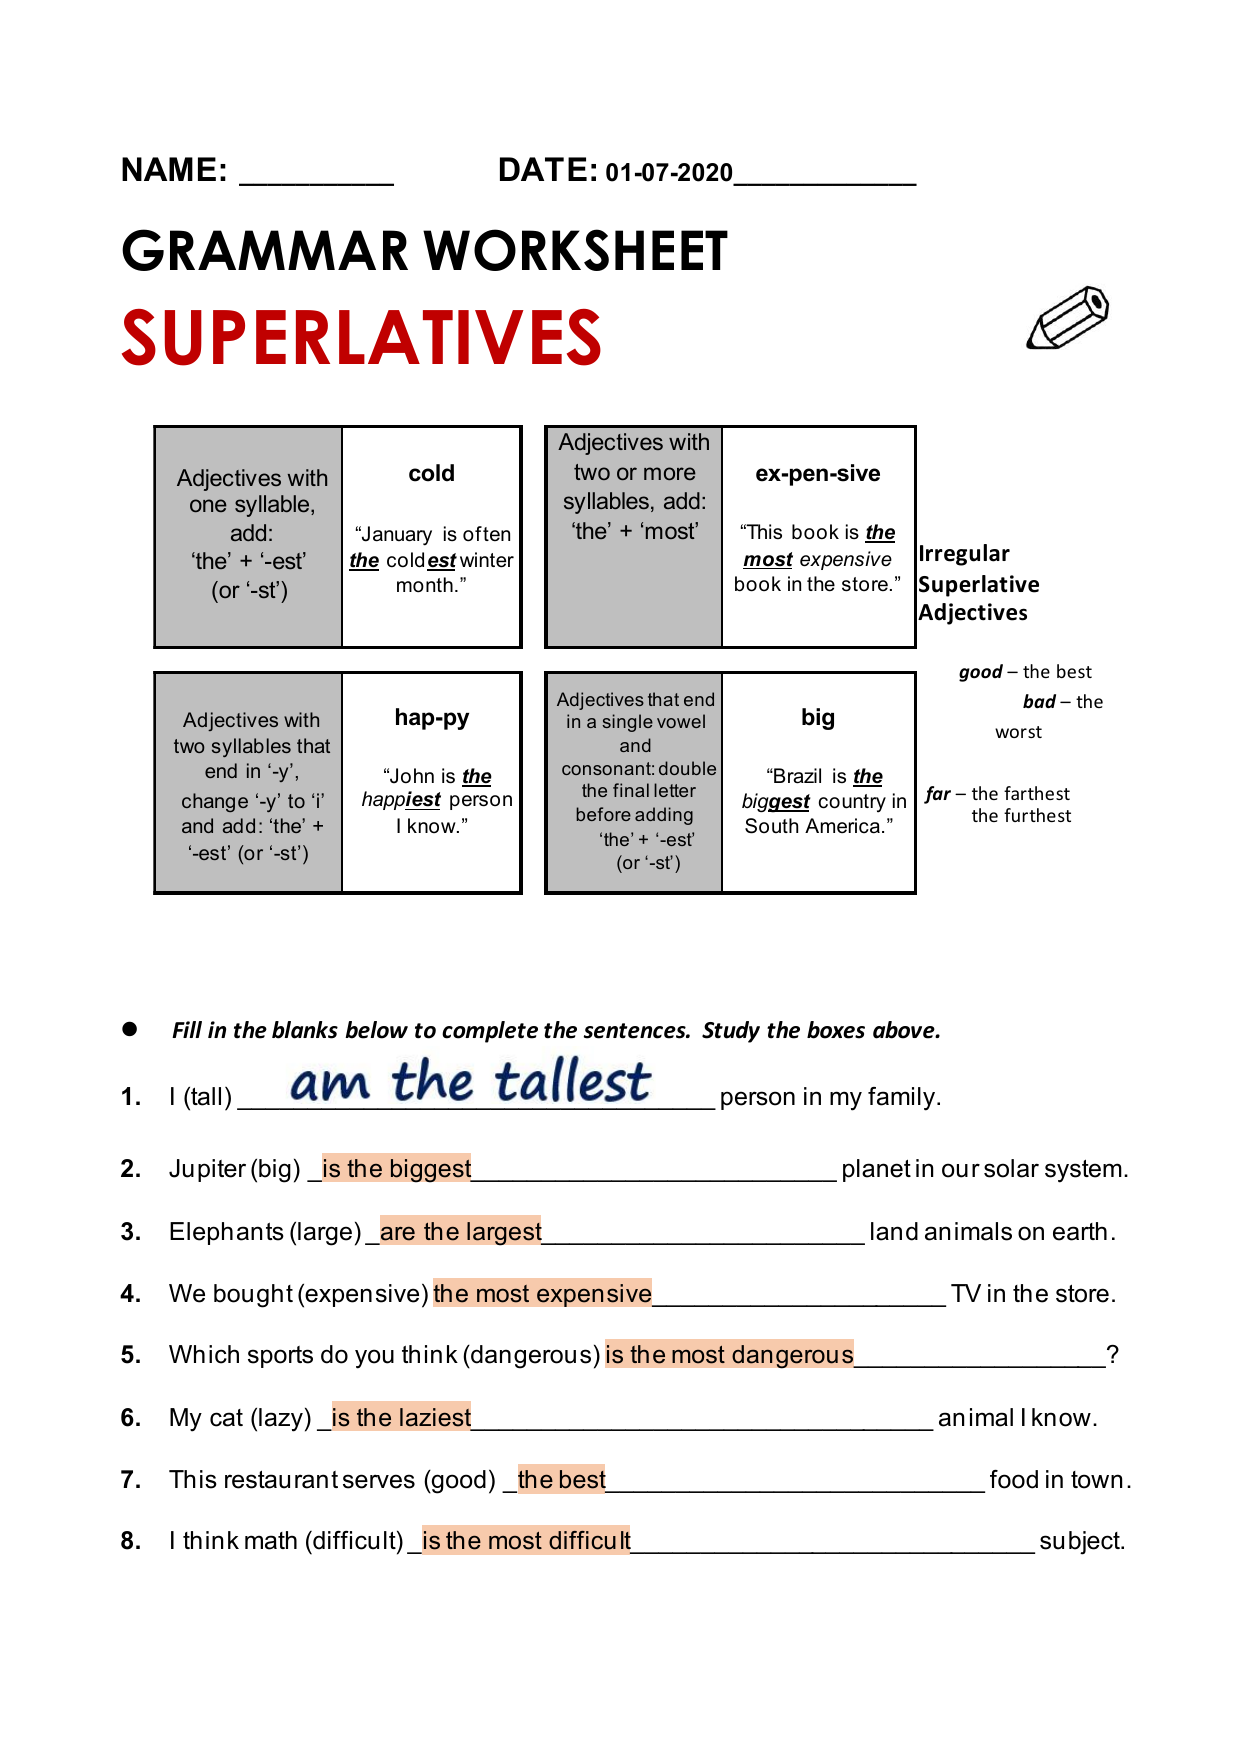 comparative-and-superlative-adjectives-worksheet-db-excel